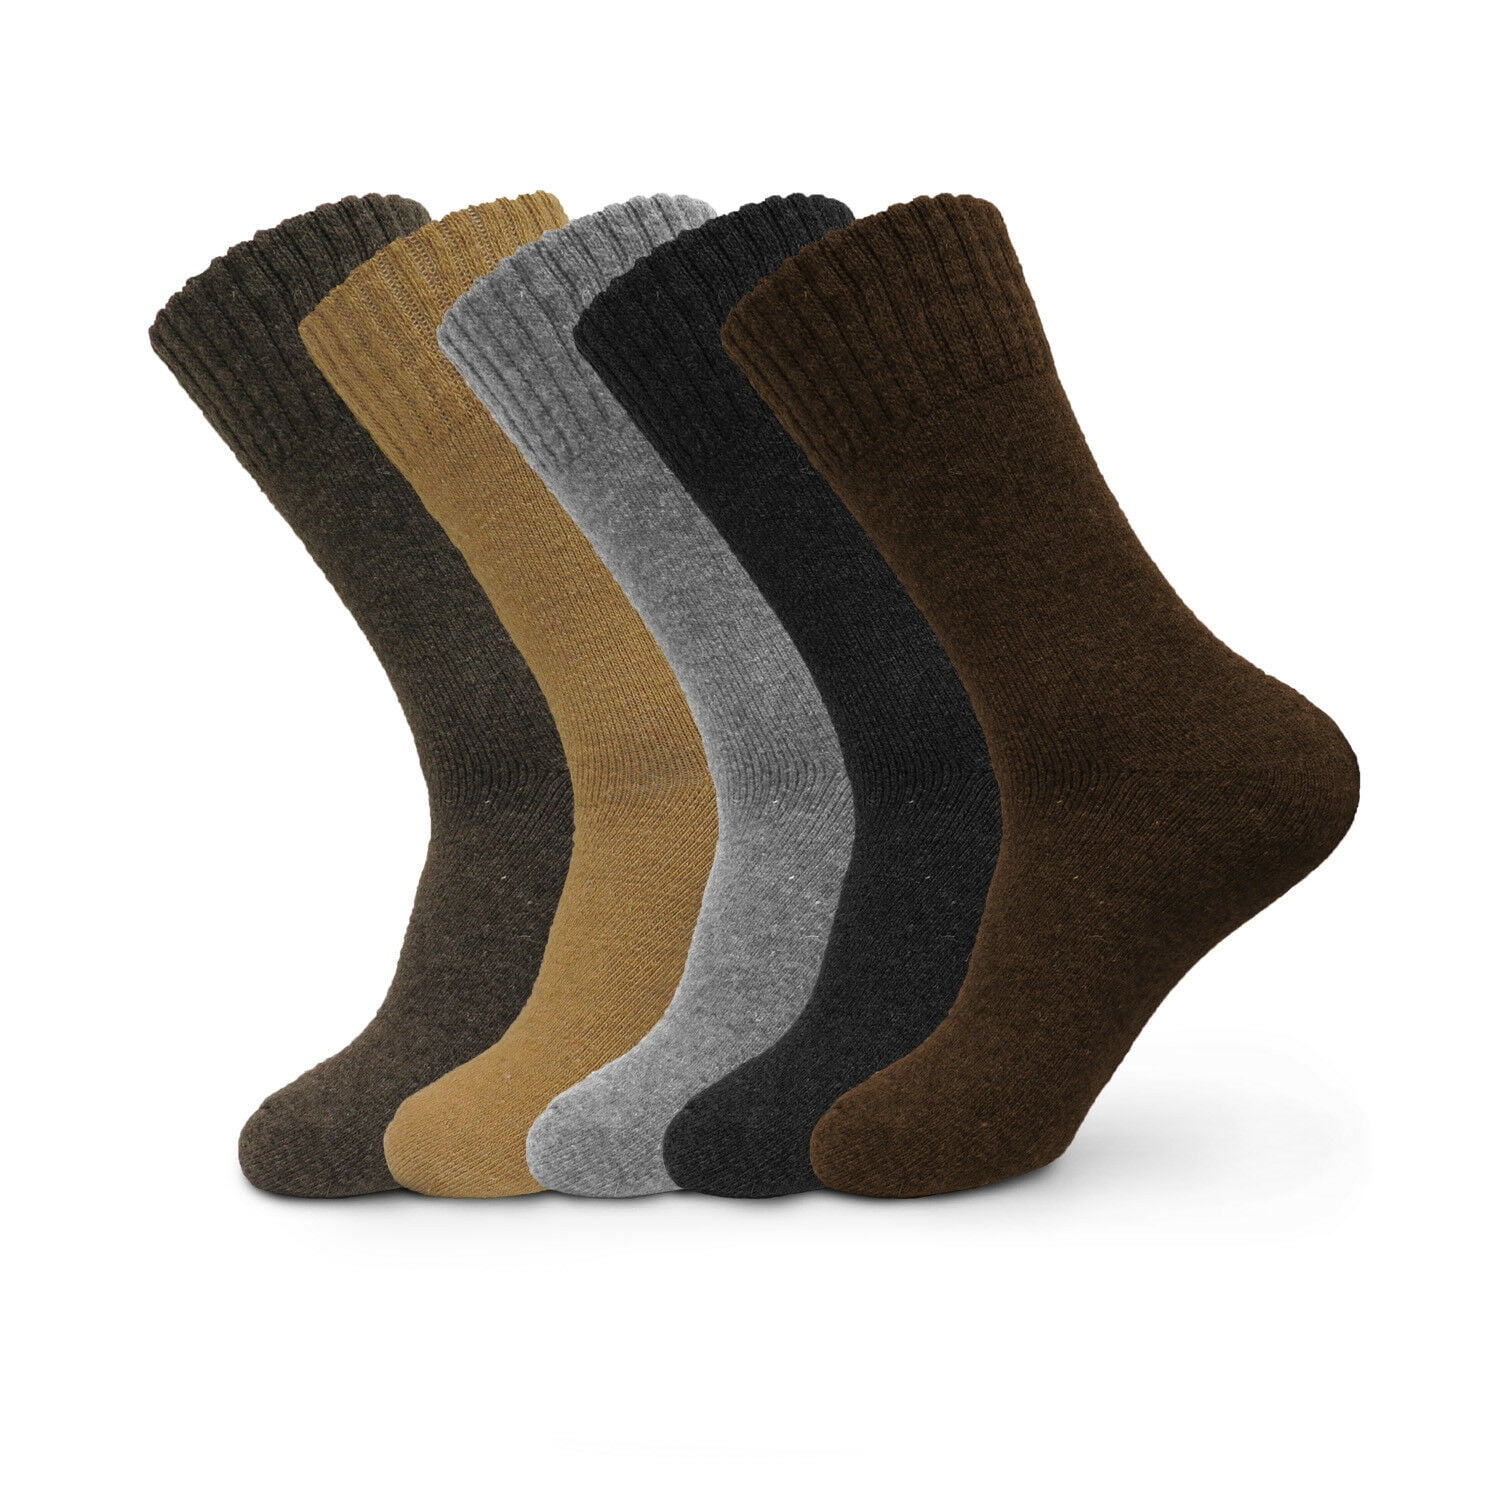 4 Pairs Men's Warm Heavy Duty Gray Merino Wool Winter Work Socks Weatherproof 